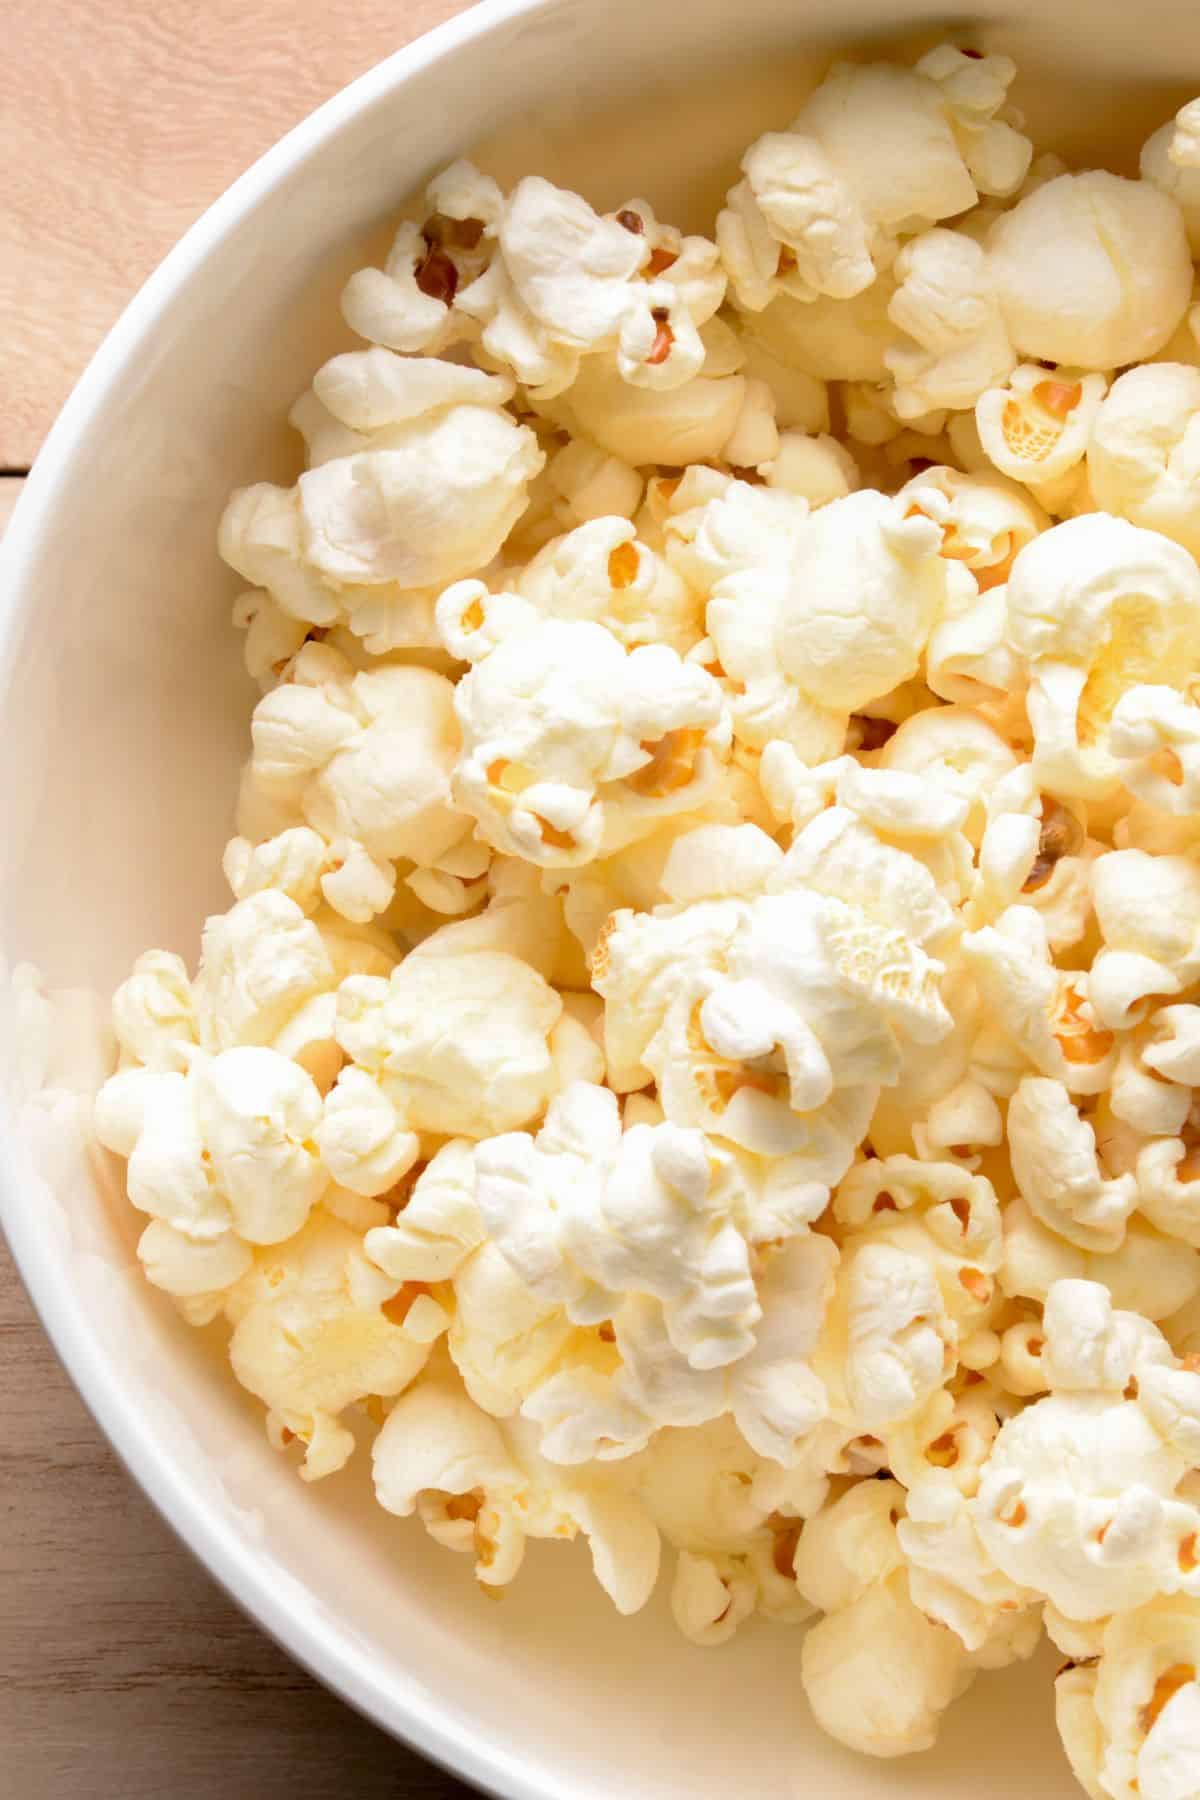 Popcorn in a white bowl.